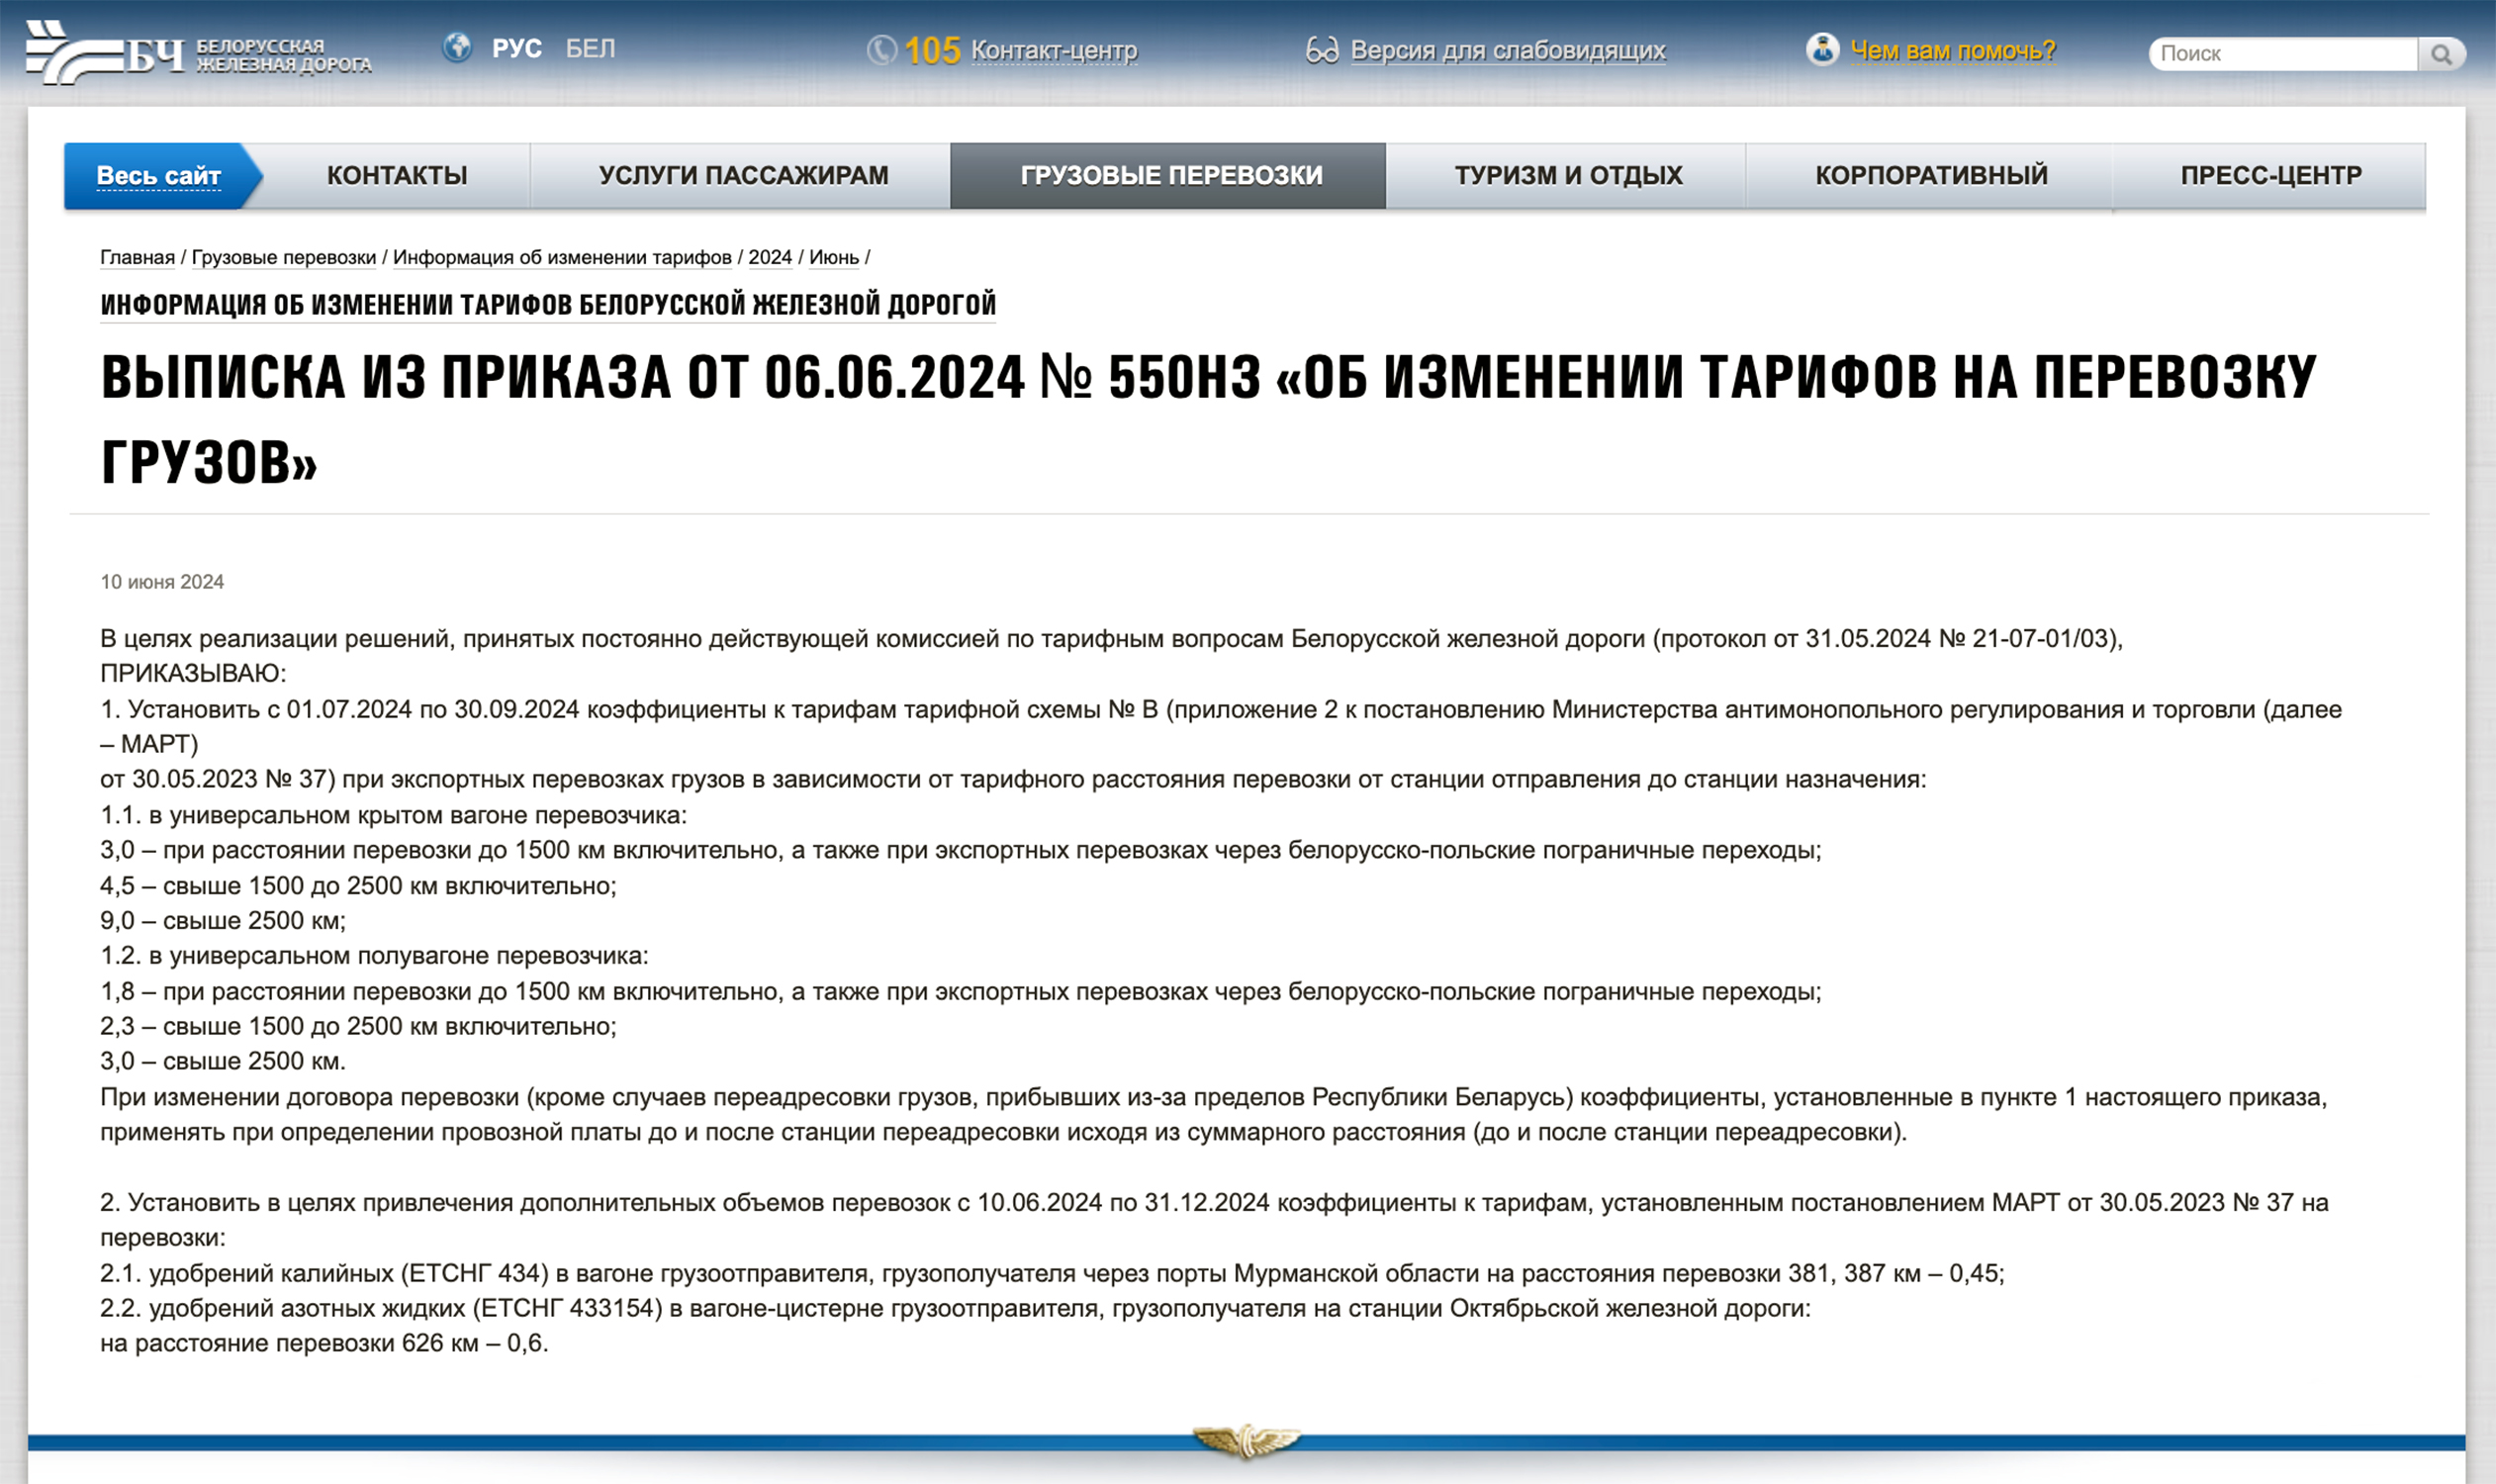 Скриншот с веб-сайта БЖД (выписка из приказа от 06.06.2024 № 550НЗ «Об изменении тарифов на перевозку грузов»)